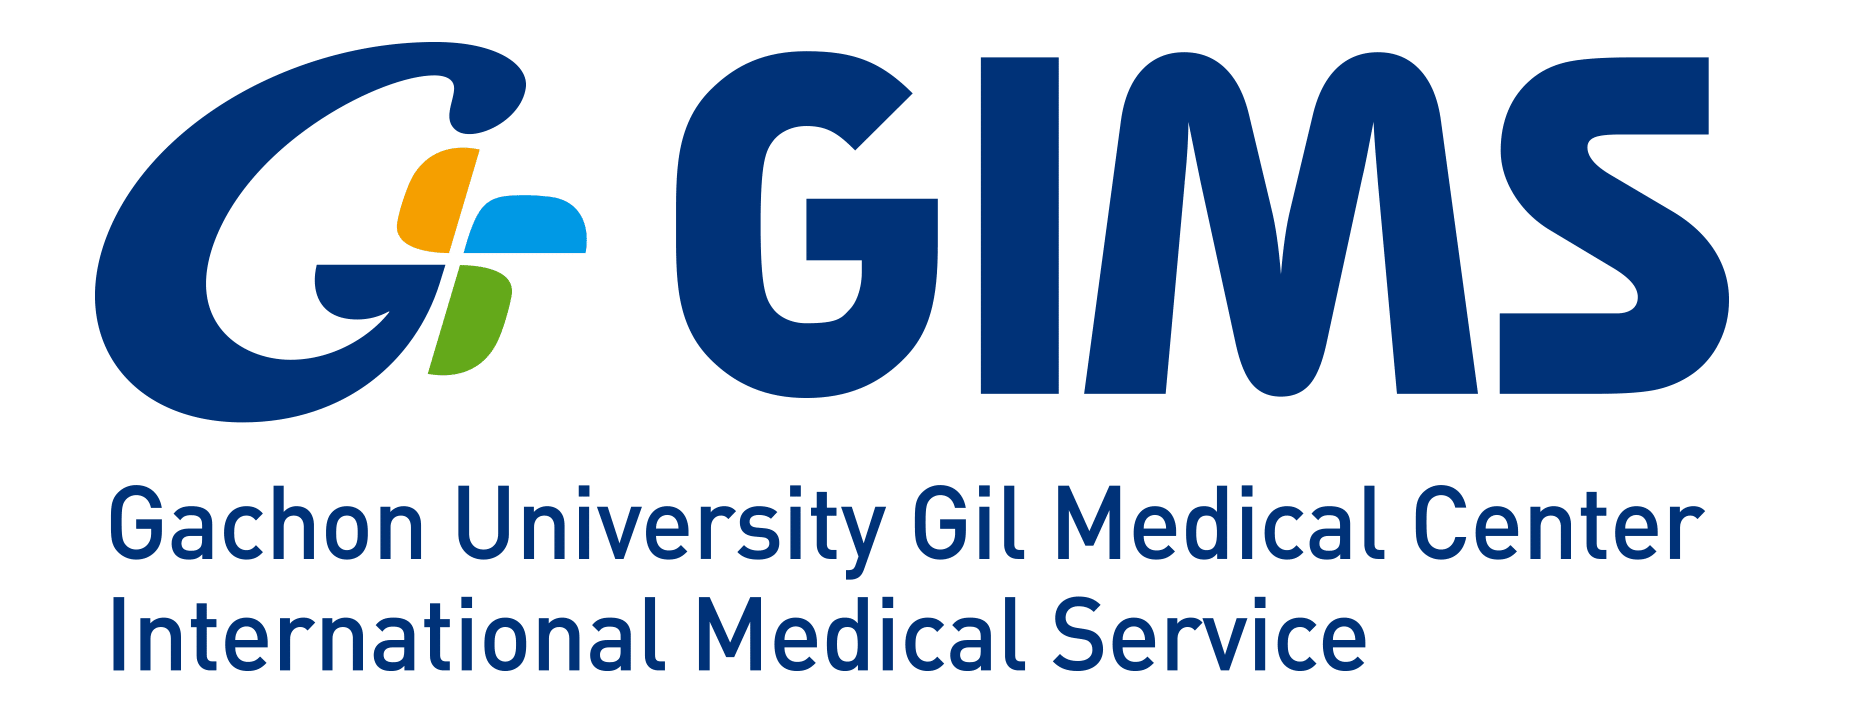 gil-medical-center-logo